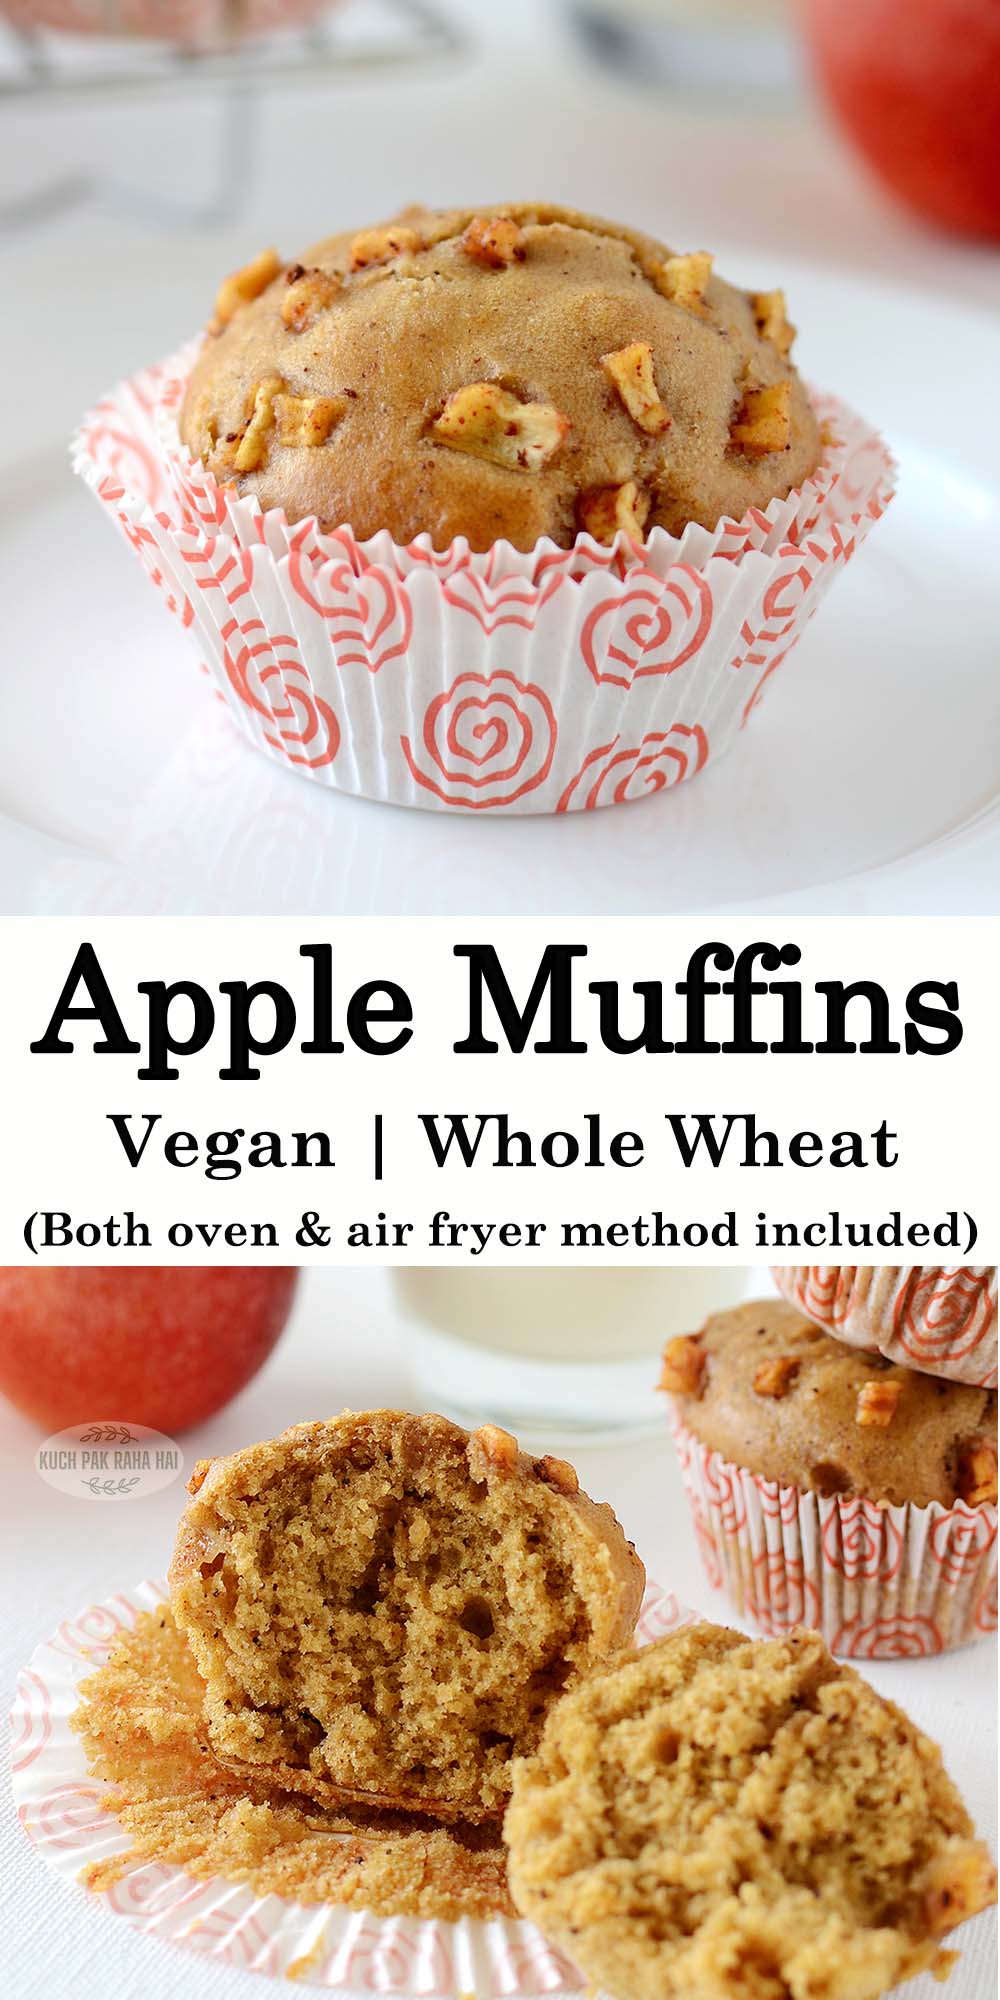 Whole wheat apple muffins vegan recipe.